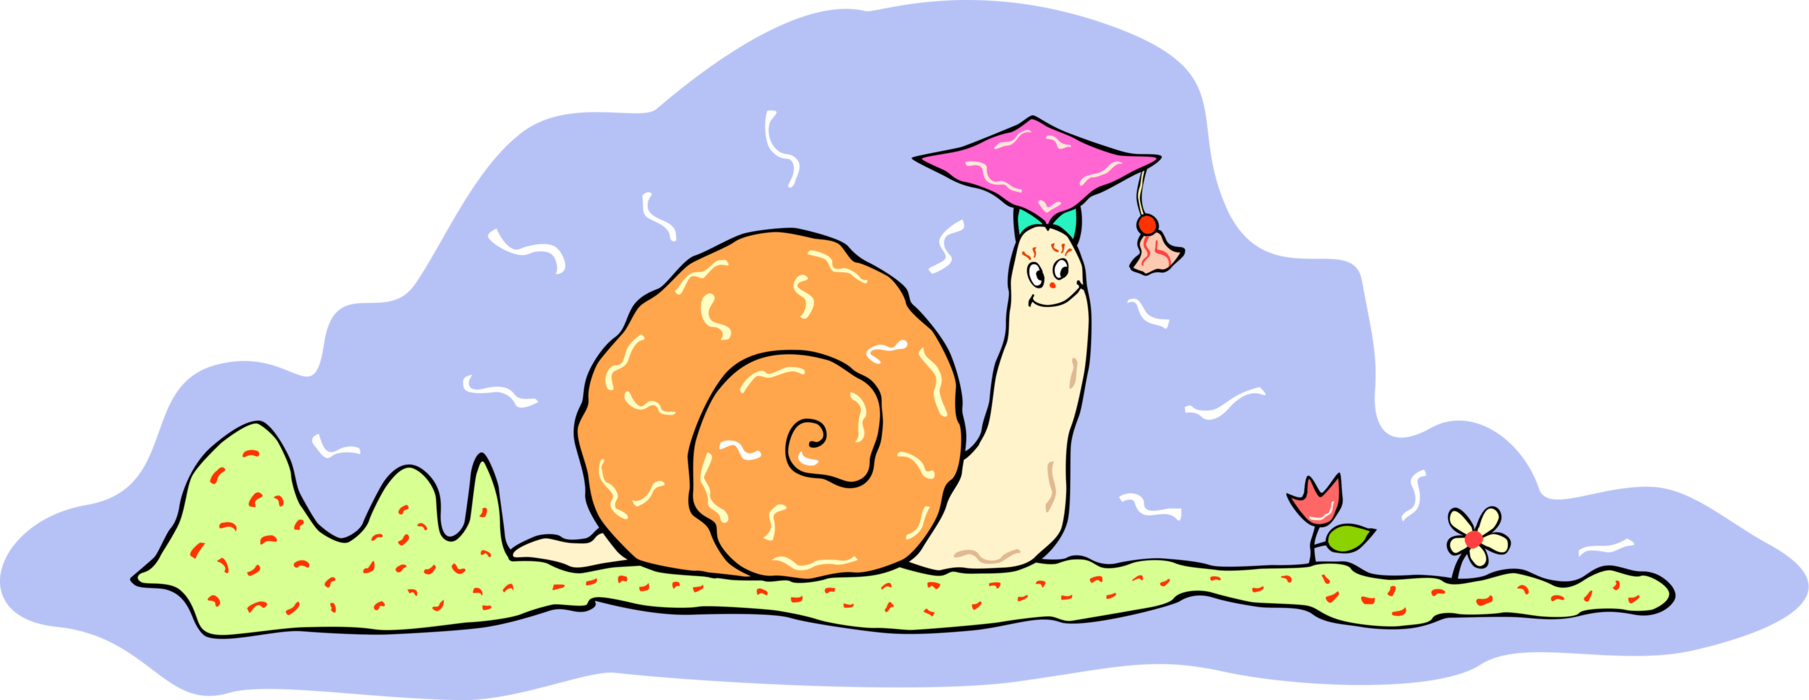 Vector Illustration of Snail or Terrestrial Gastropod Mollusk with Graduation Hat